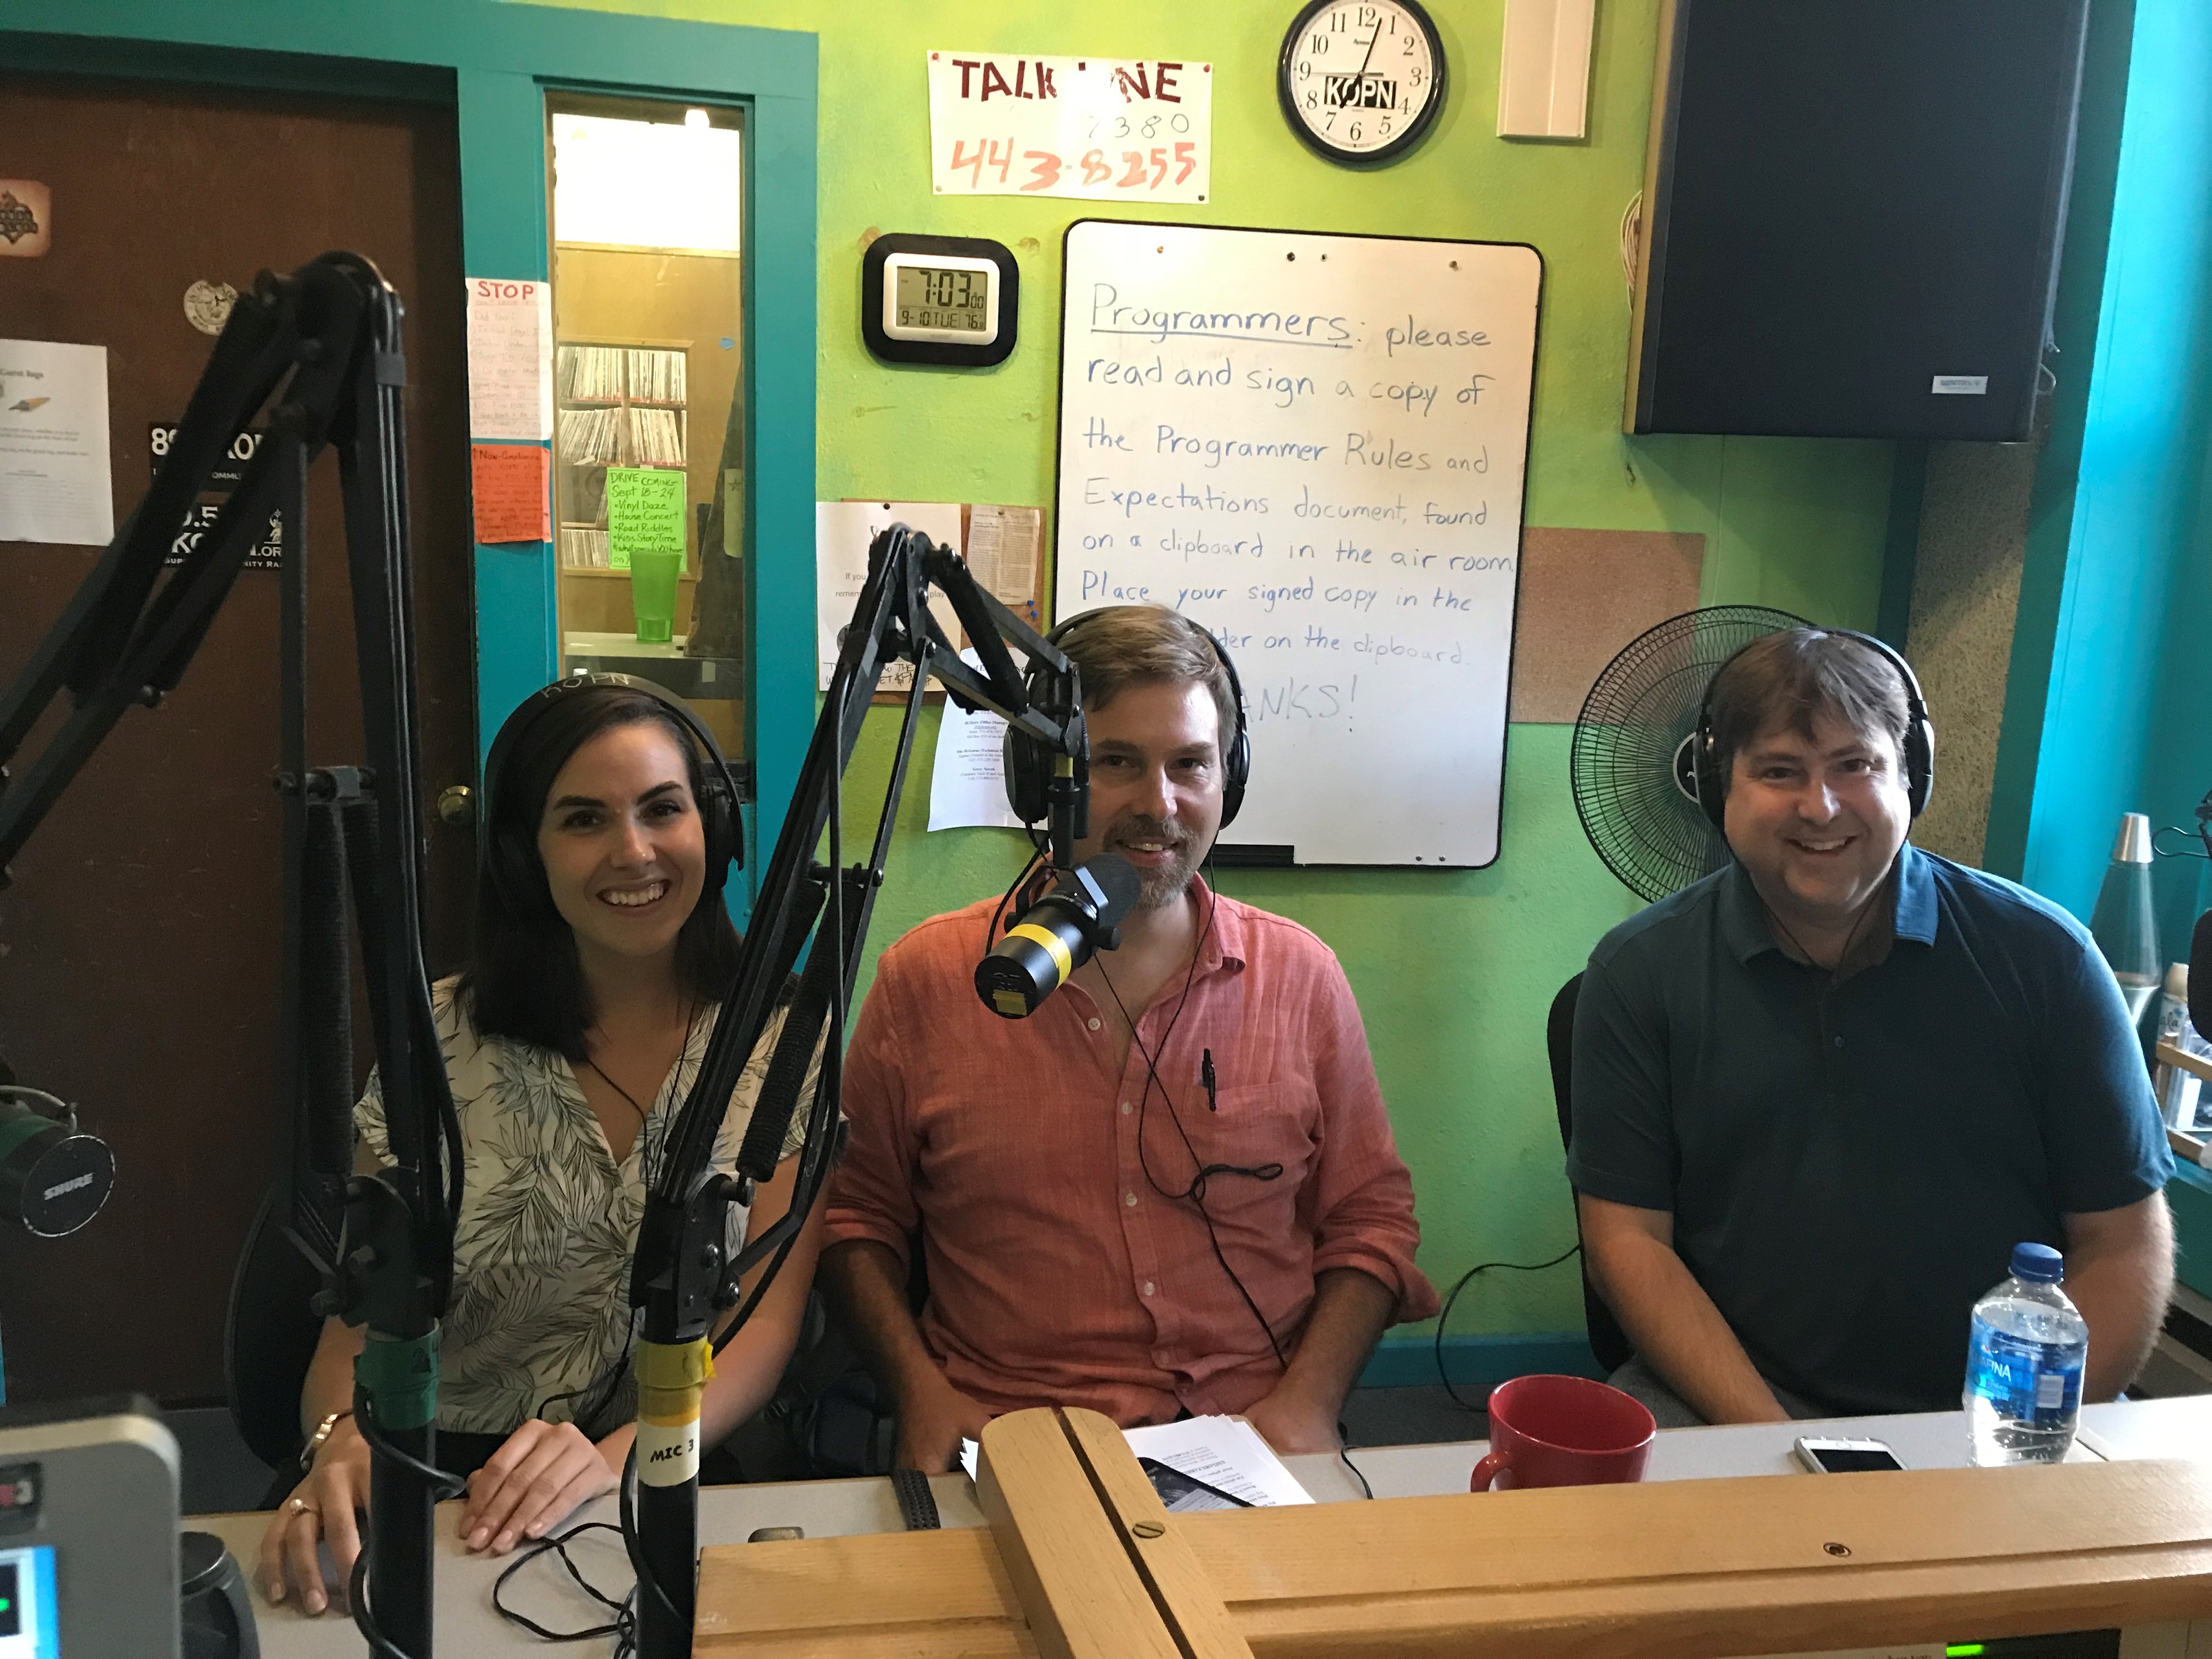 KOPN radio host Daria (not picturerd), with Geography's own Taylor Fox, Soren Larsen and Matt Foulkes